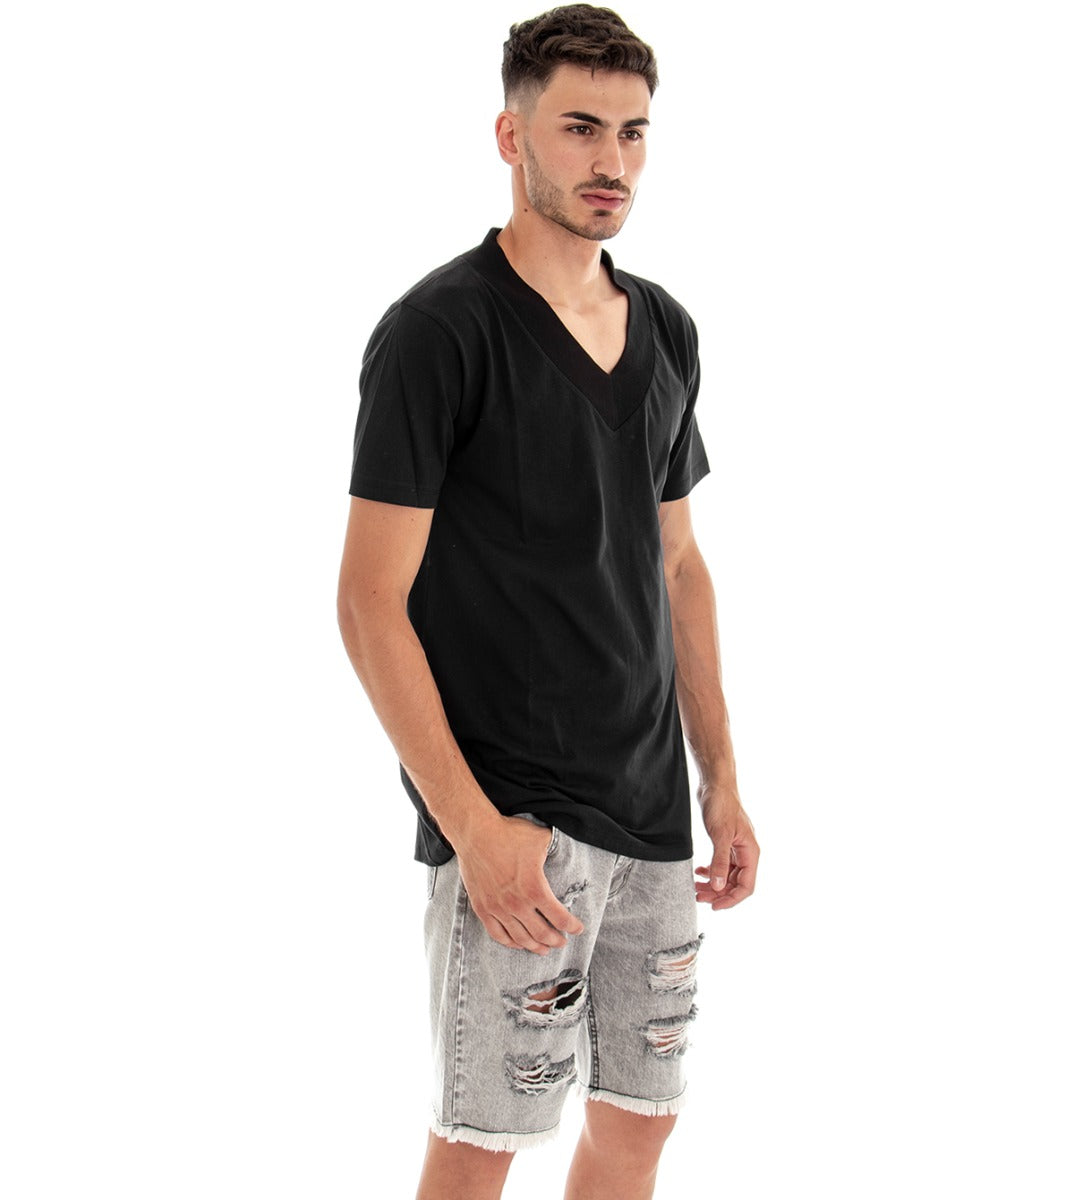 Men's T-shirt Short Sleeve V-Neck Solid Color Black Cotton GIOSAL